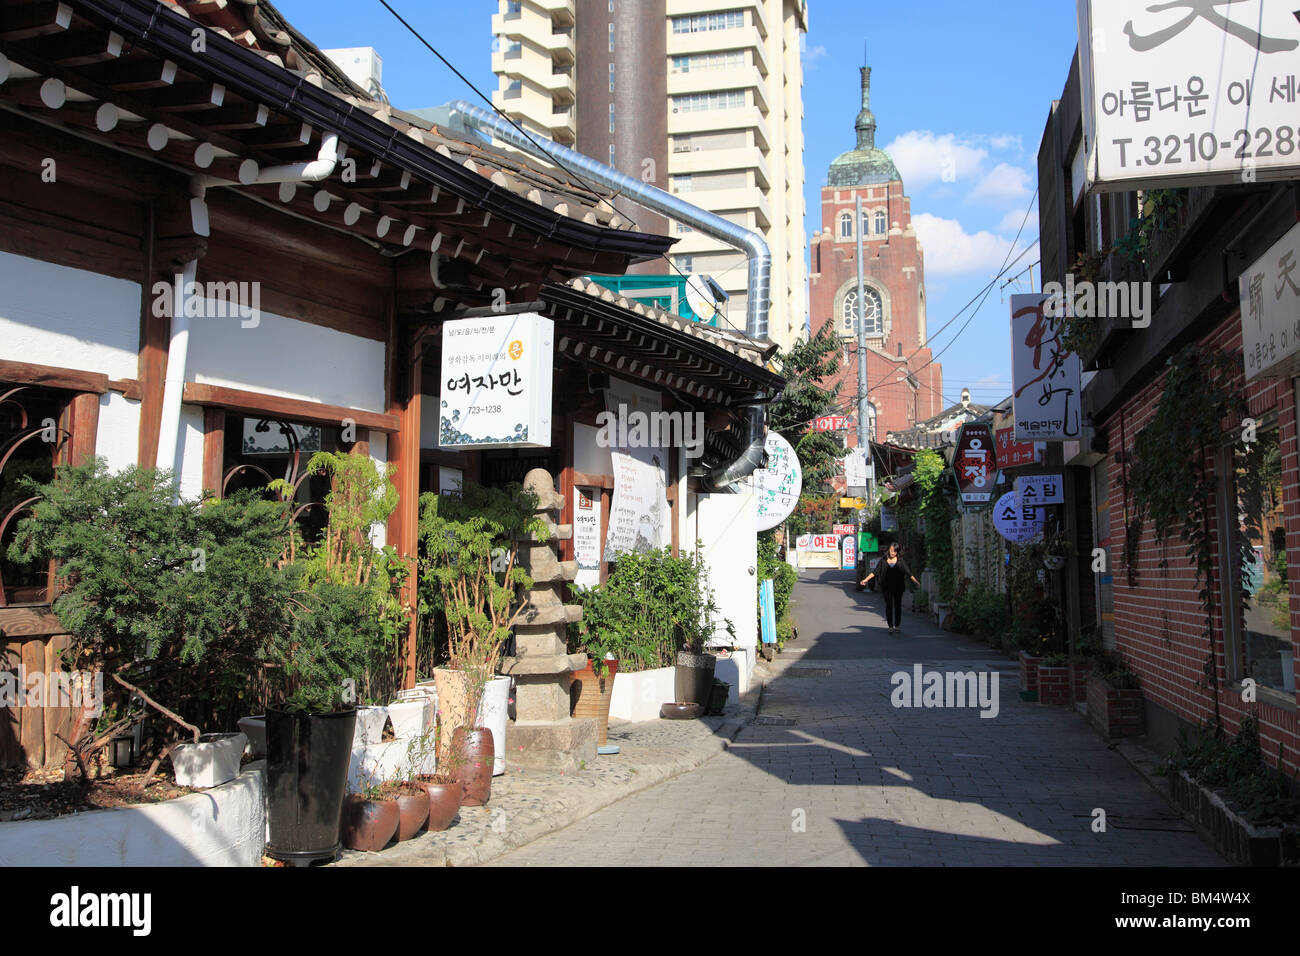 Restaurant, Insadong, Insadong is famous for its handicrafts, Seoul, South Korea, Asia  Stock Photo